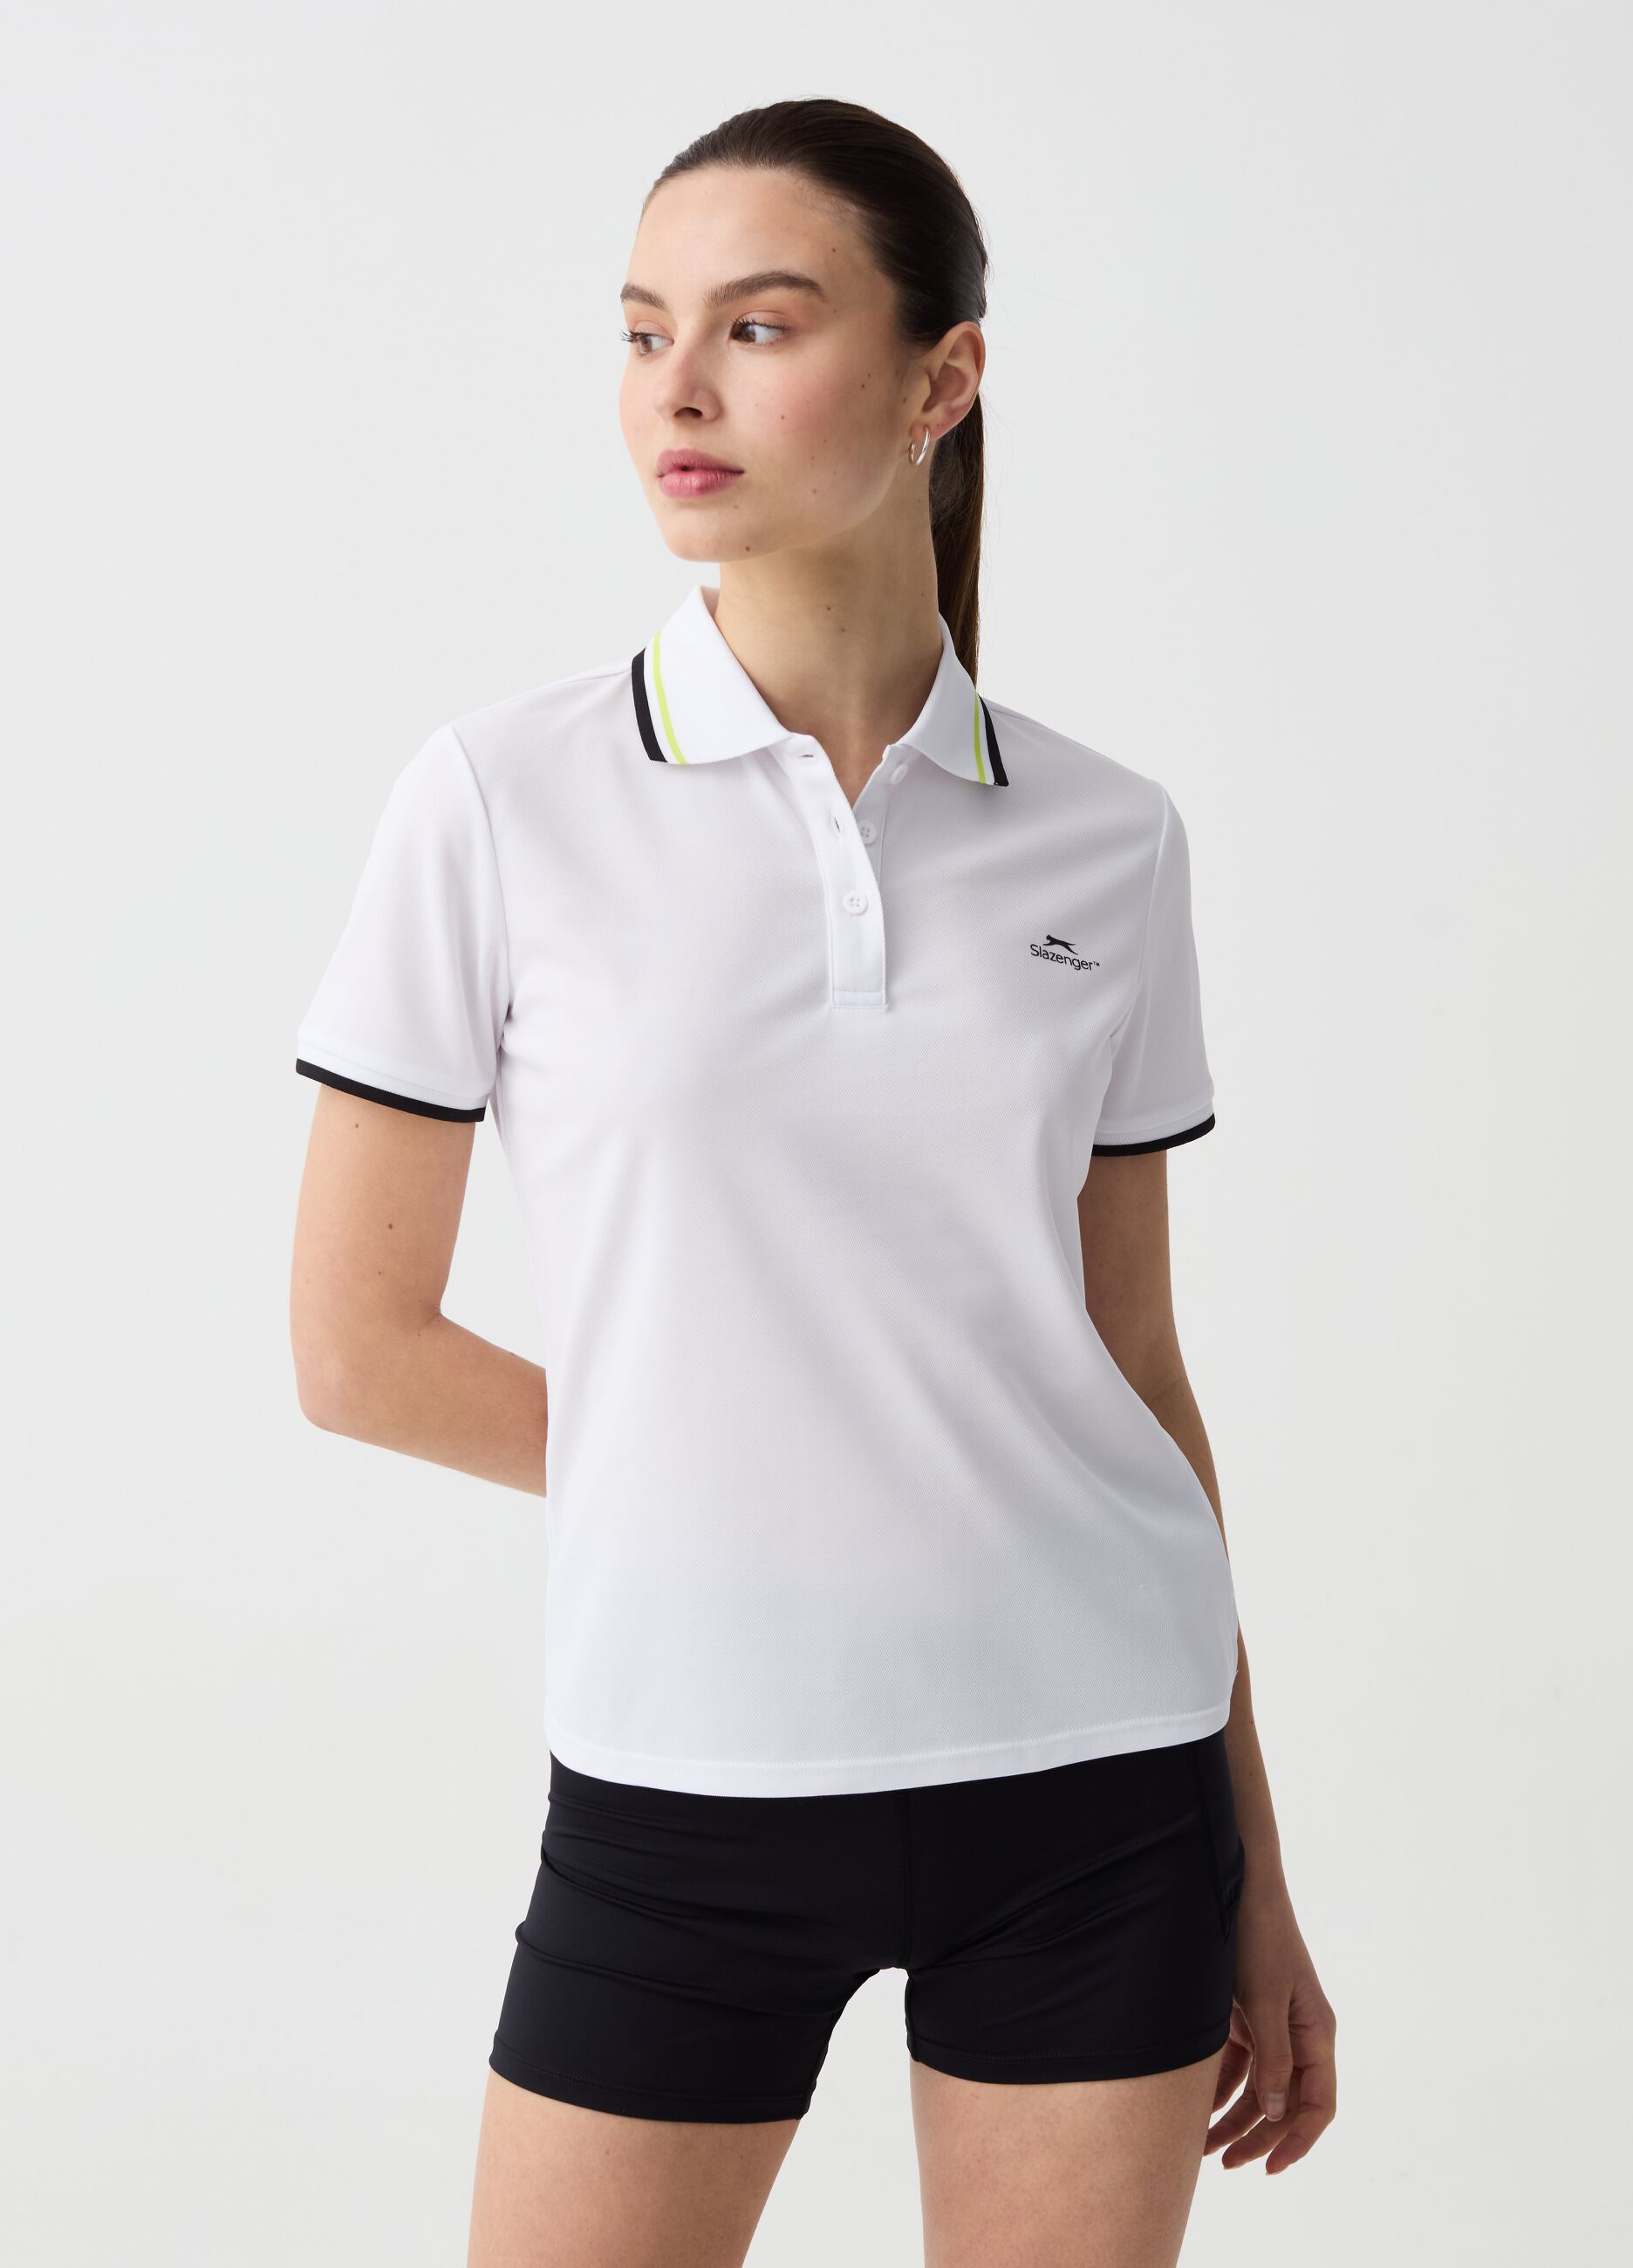 Slazenger tennis polo shirt with striped trims